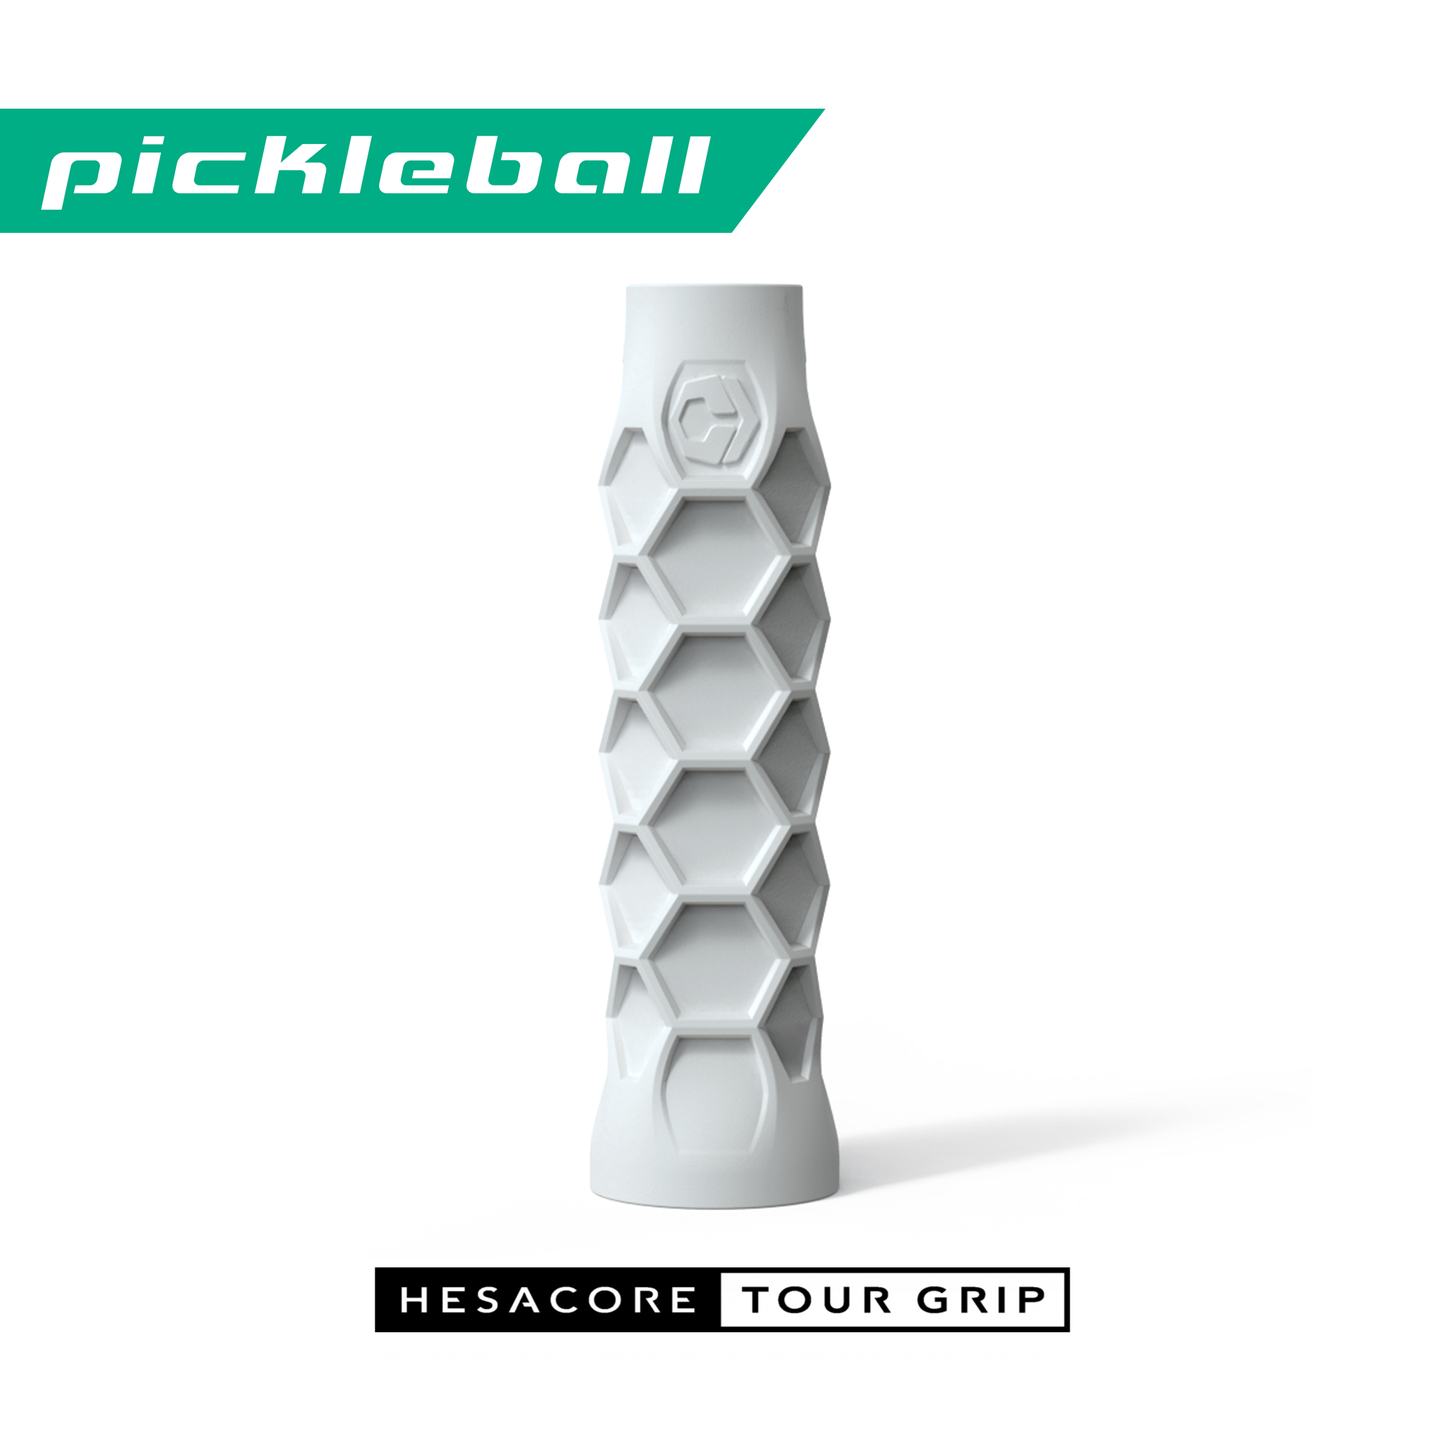 Pickleball Hesacore Tour Grip